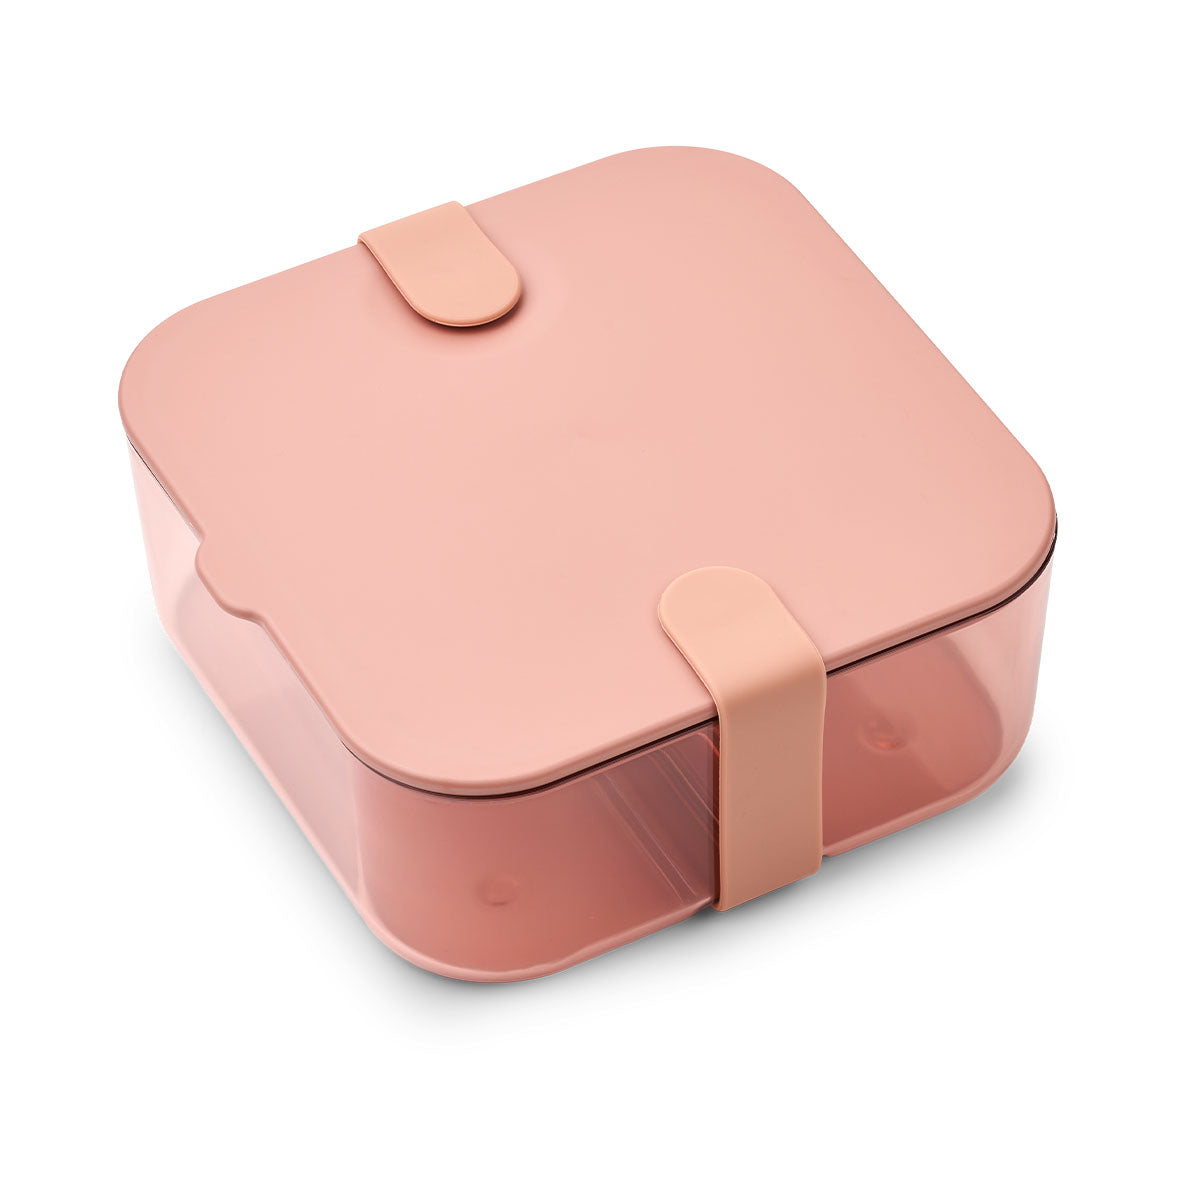 Lunchbox Carin Liewood petit modèle en rose tuscany/framboise poussiéreuse